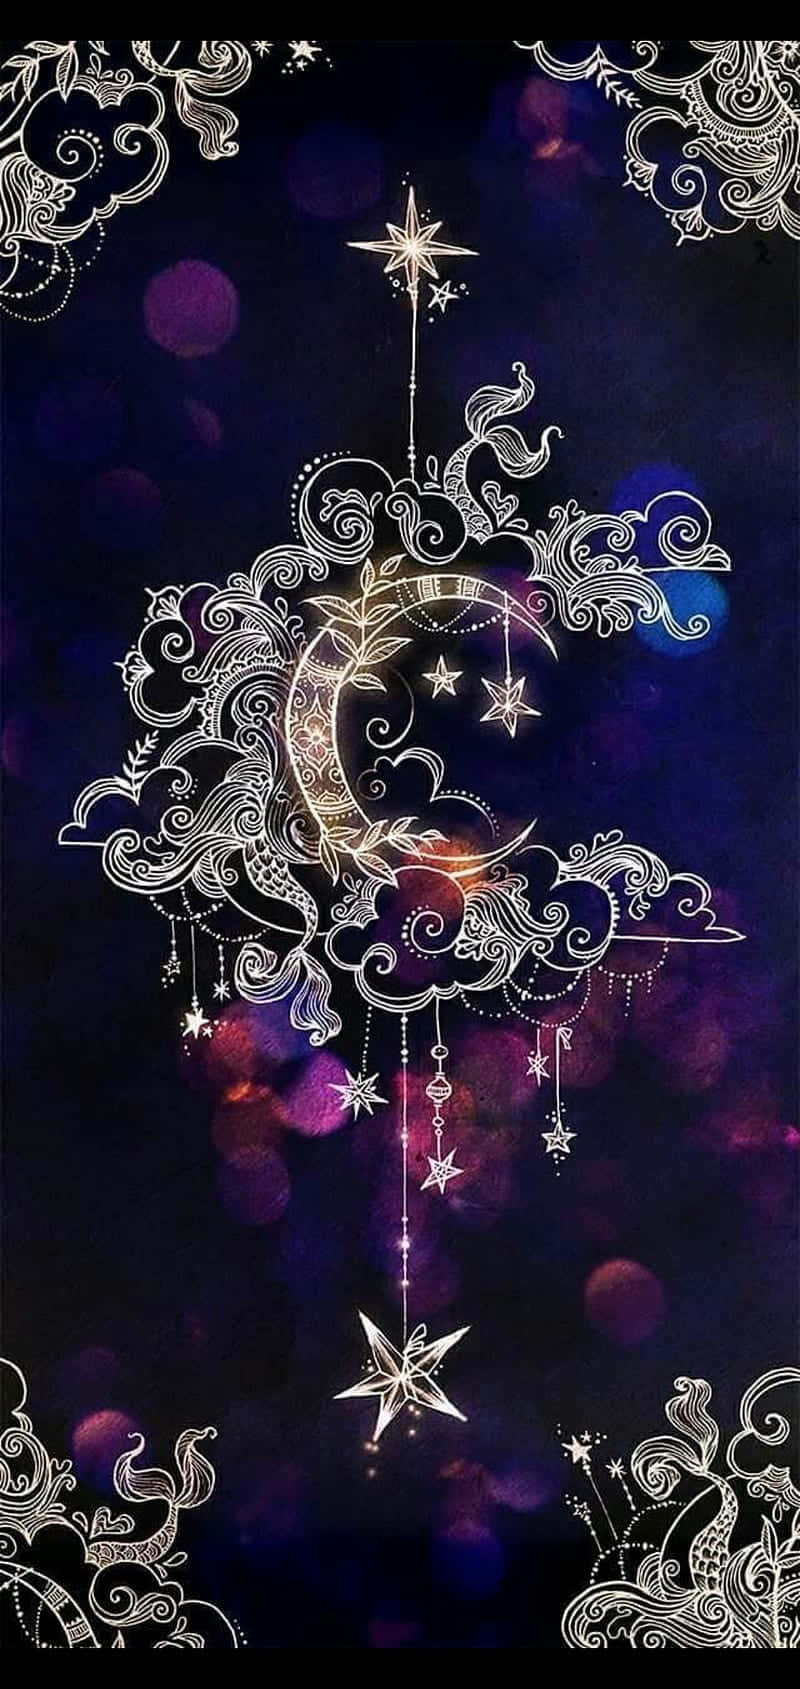 "Dream Under the Magical Moon" Wallpaper